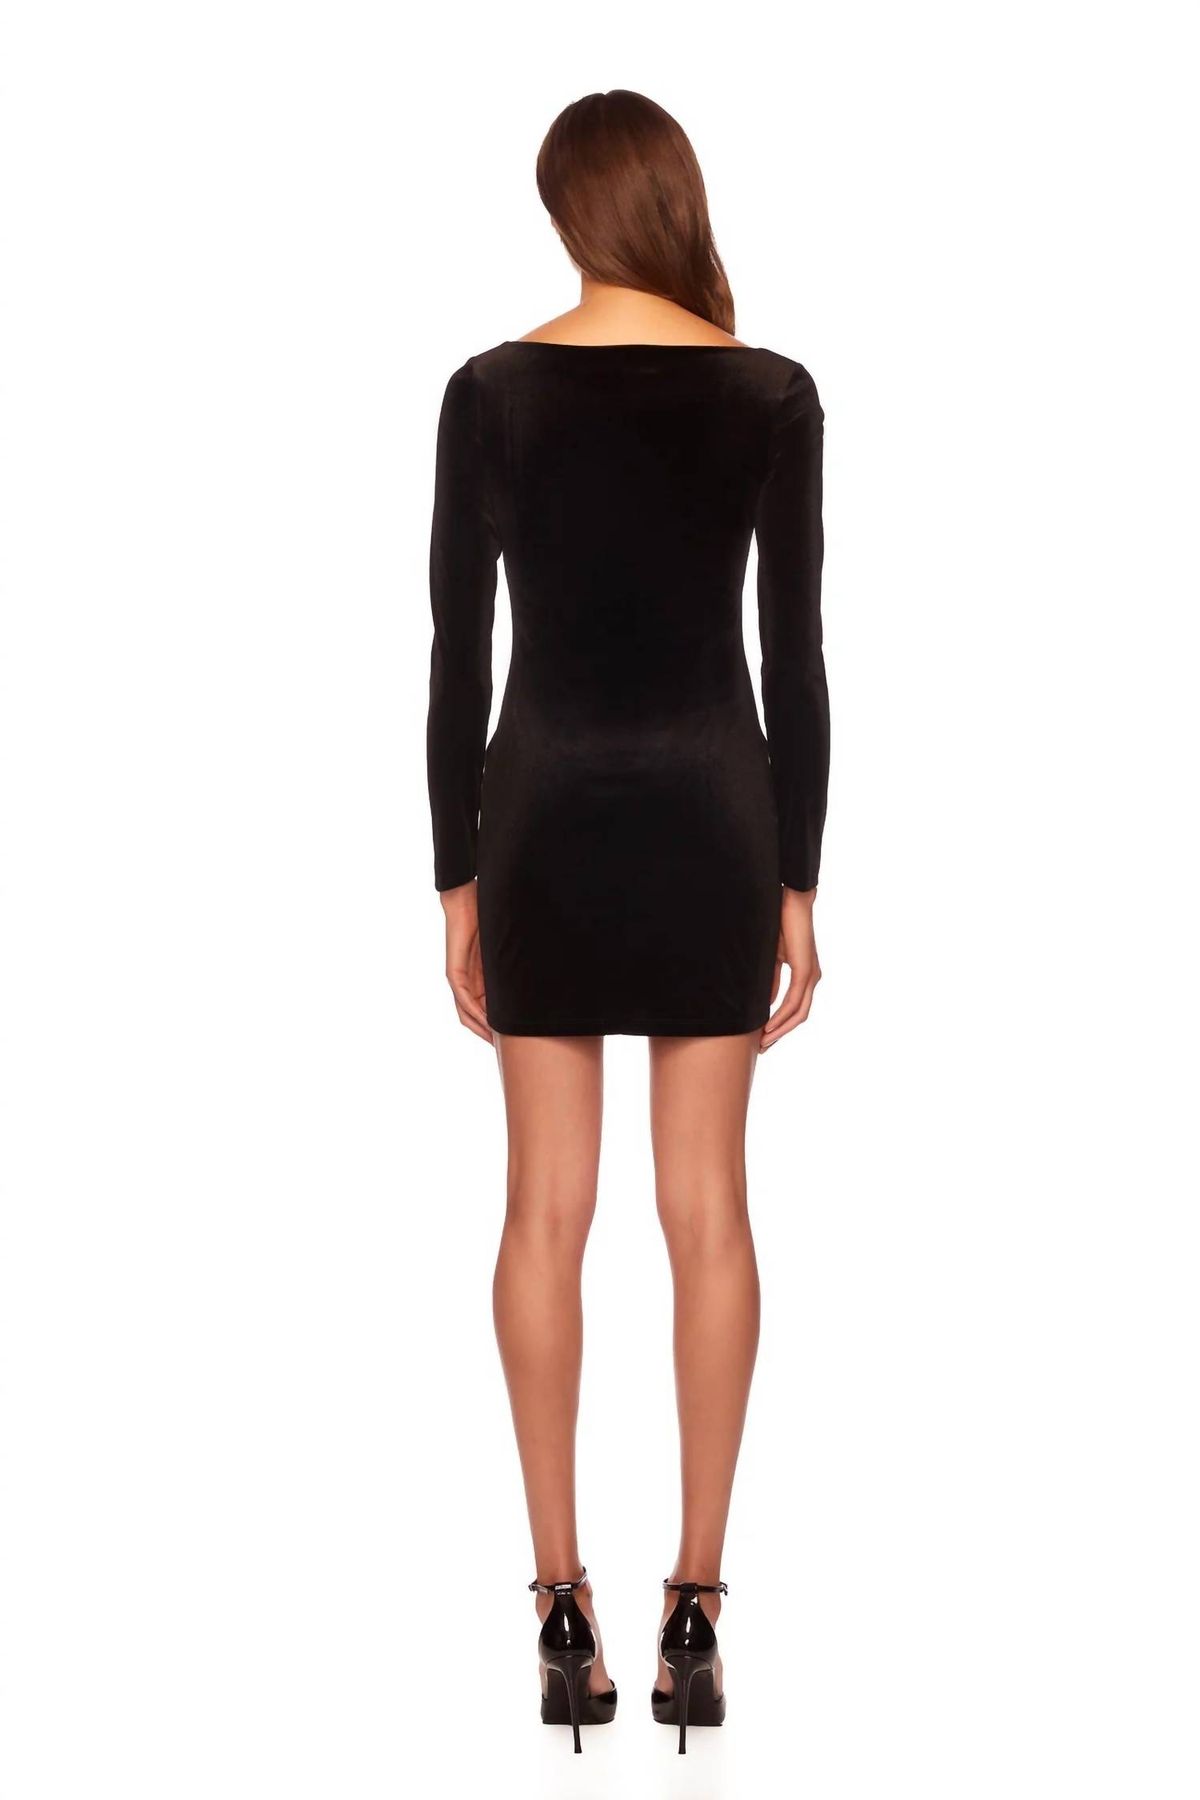 Style 1-626137742-3900 Susana Monaco Size XS Long Sleeve Velvet Black Cocktail Dress on Queenly